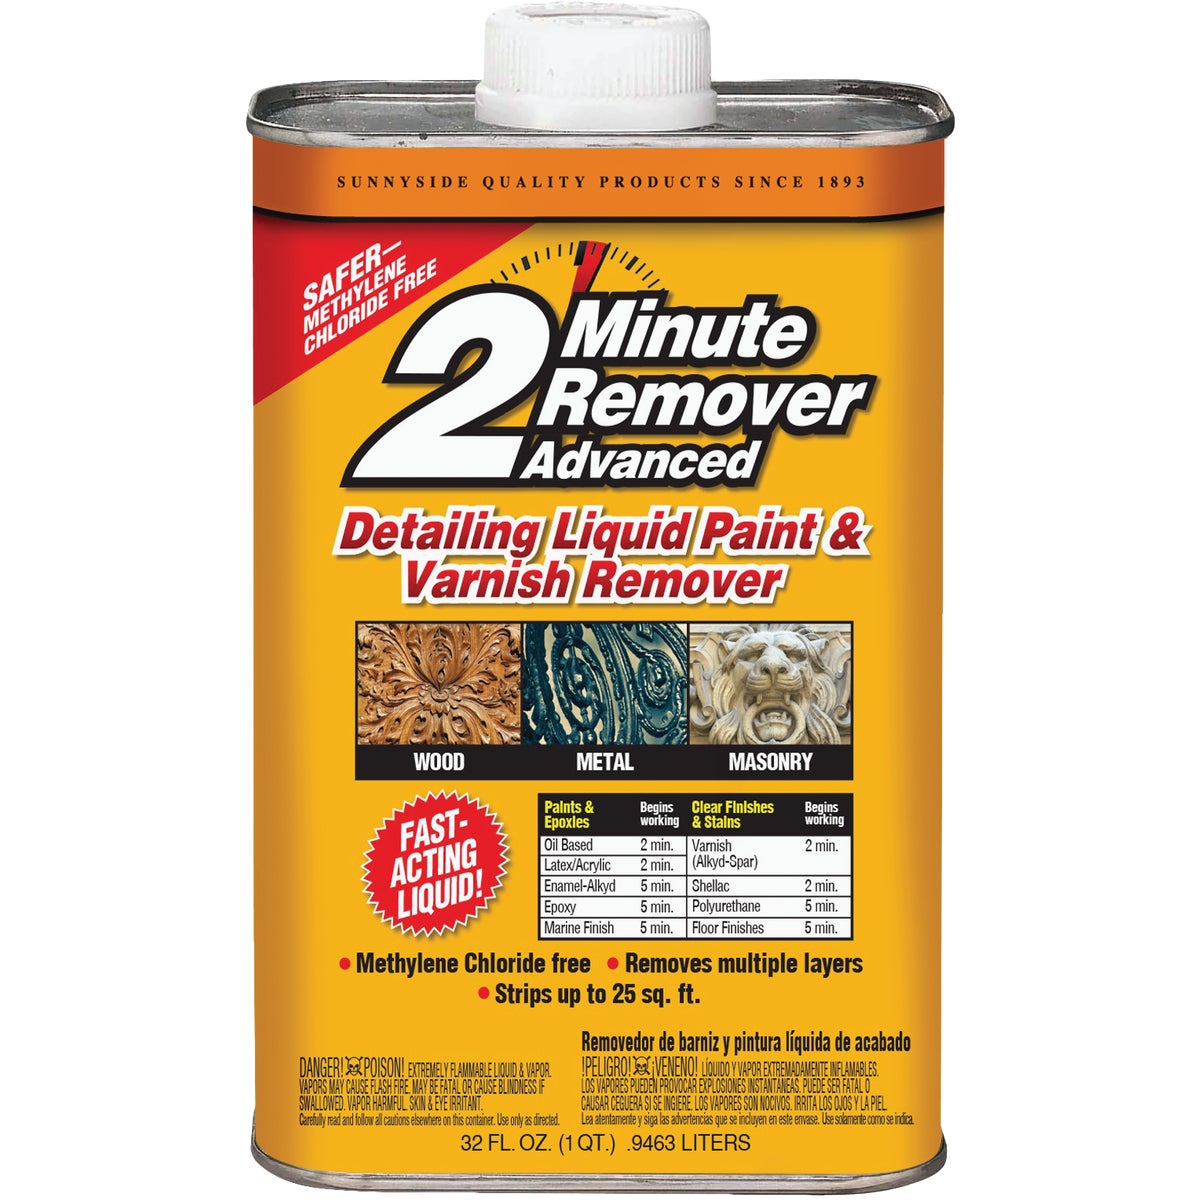 Sunnyside 2 Minute Remover Advanced Detailing Qt. Liquid Paint & Varnish Remover